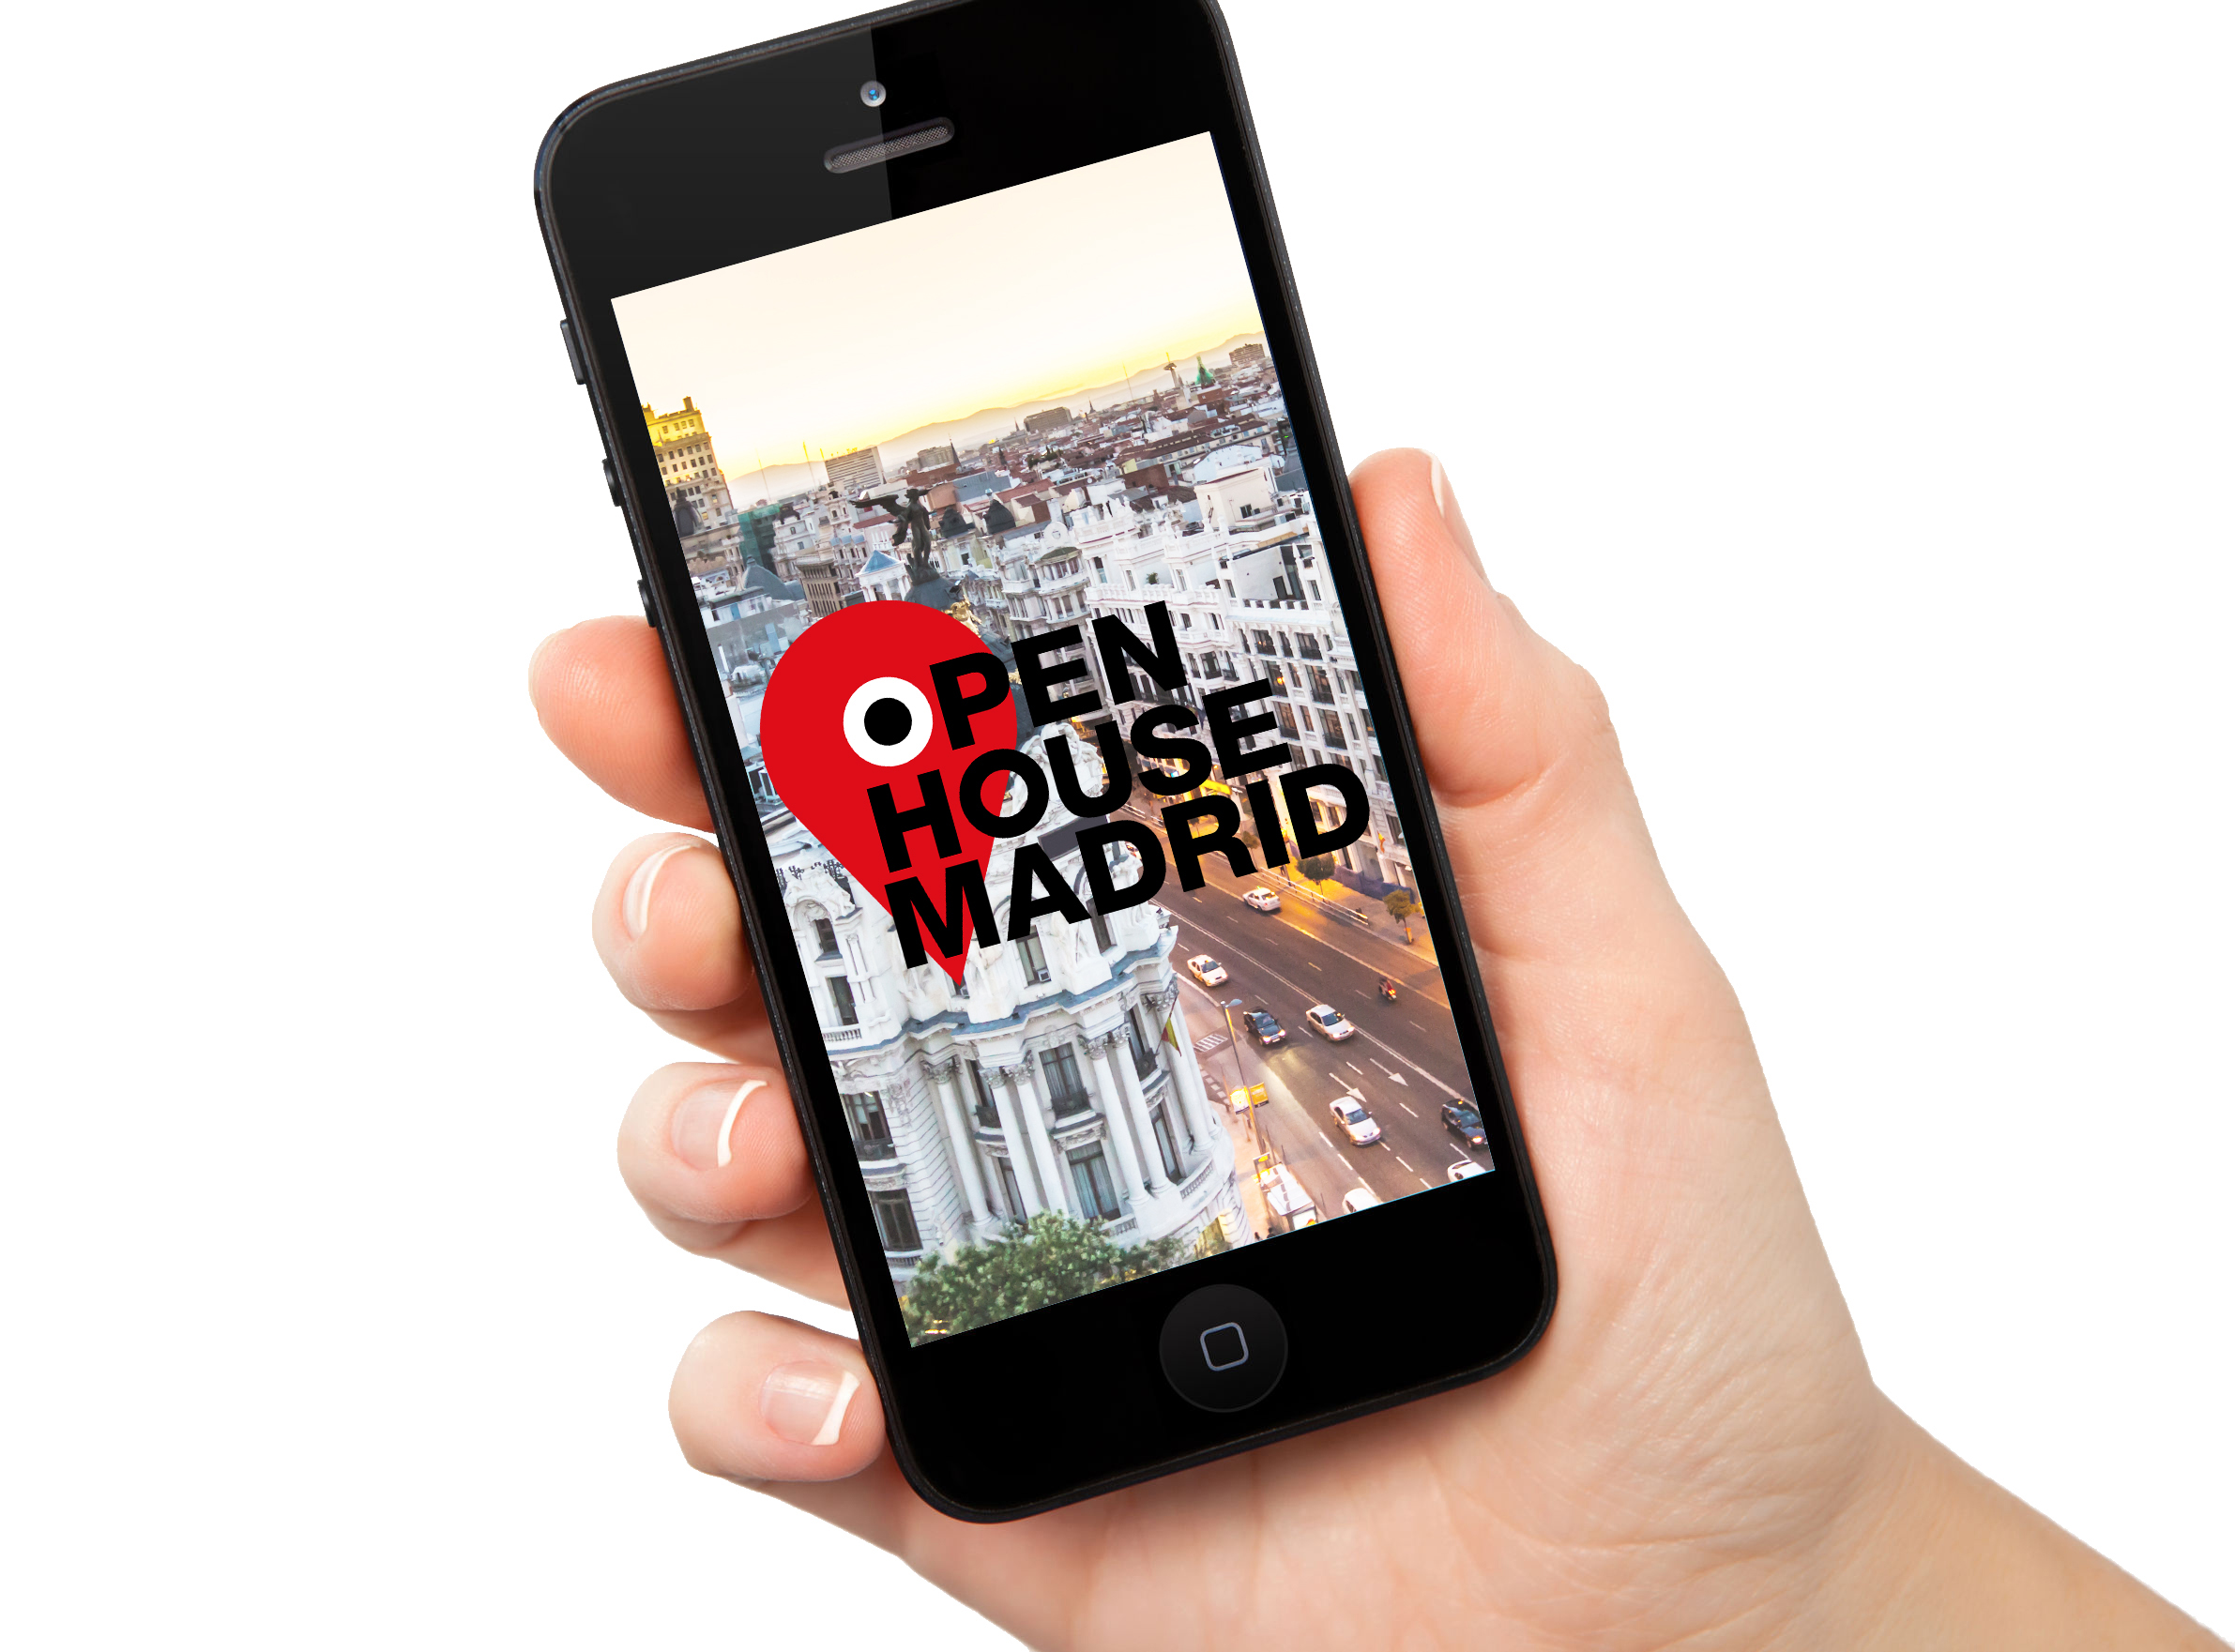 aplicacion Open house madrid diariodesign